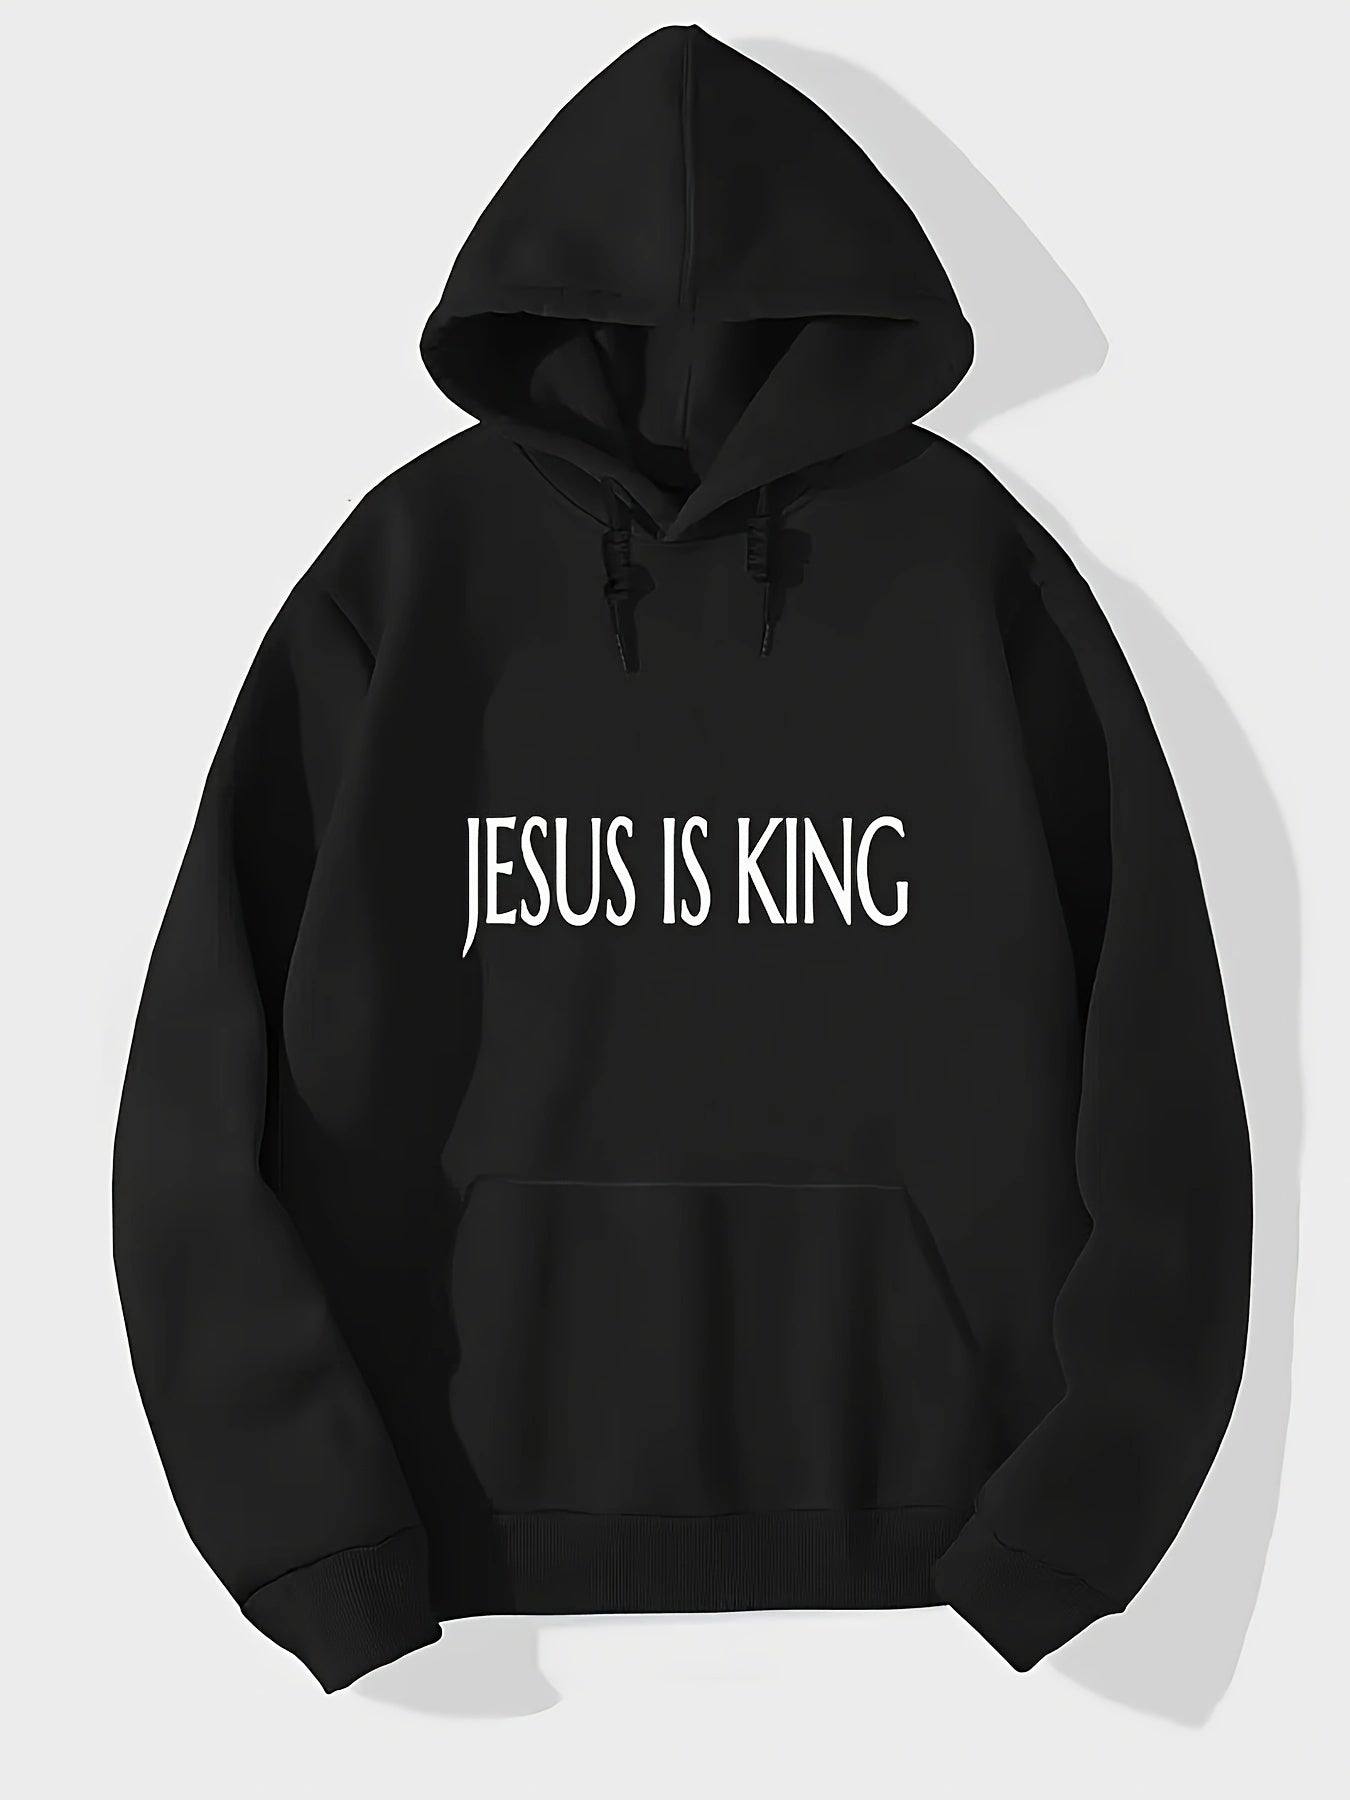 JESUS IS KING Men's Christian Pullover Hooded Sweatshirt claimedbygoddesigns